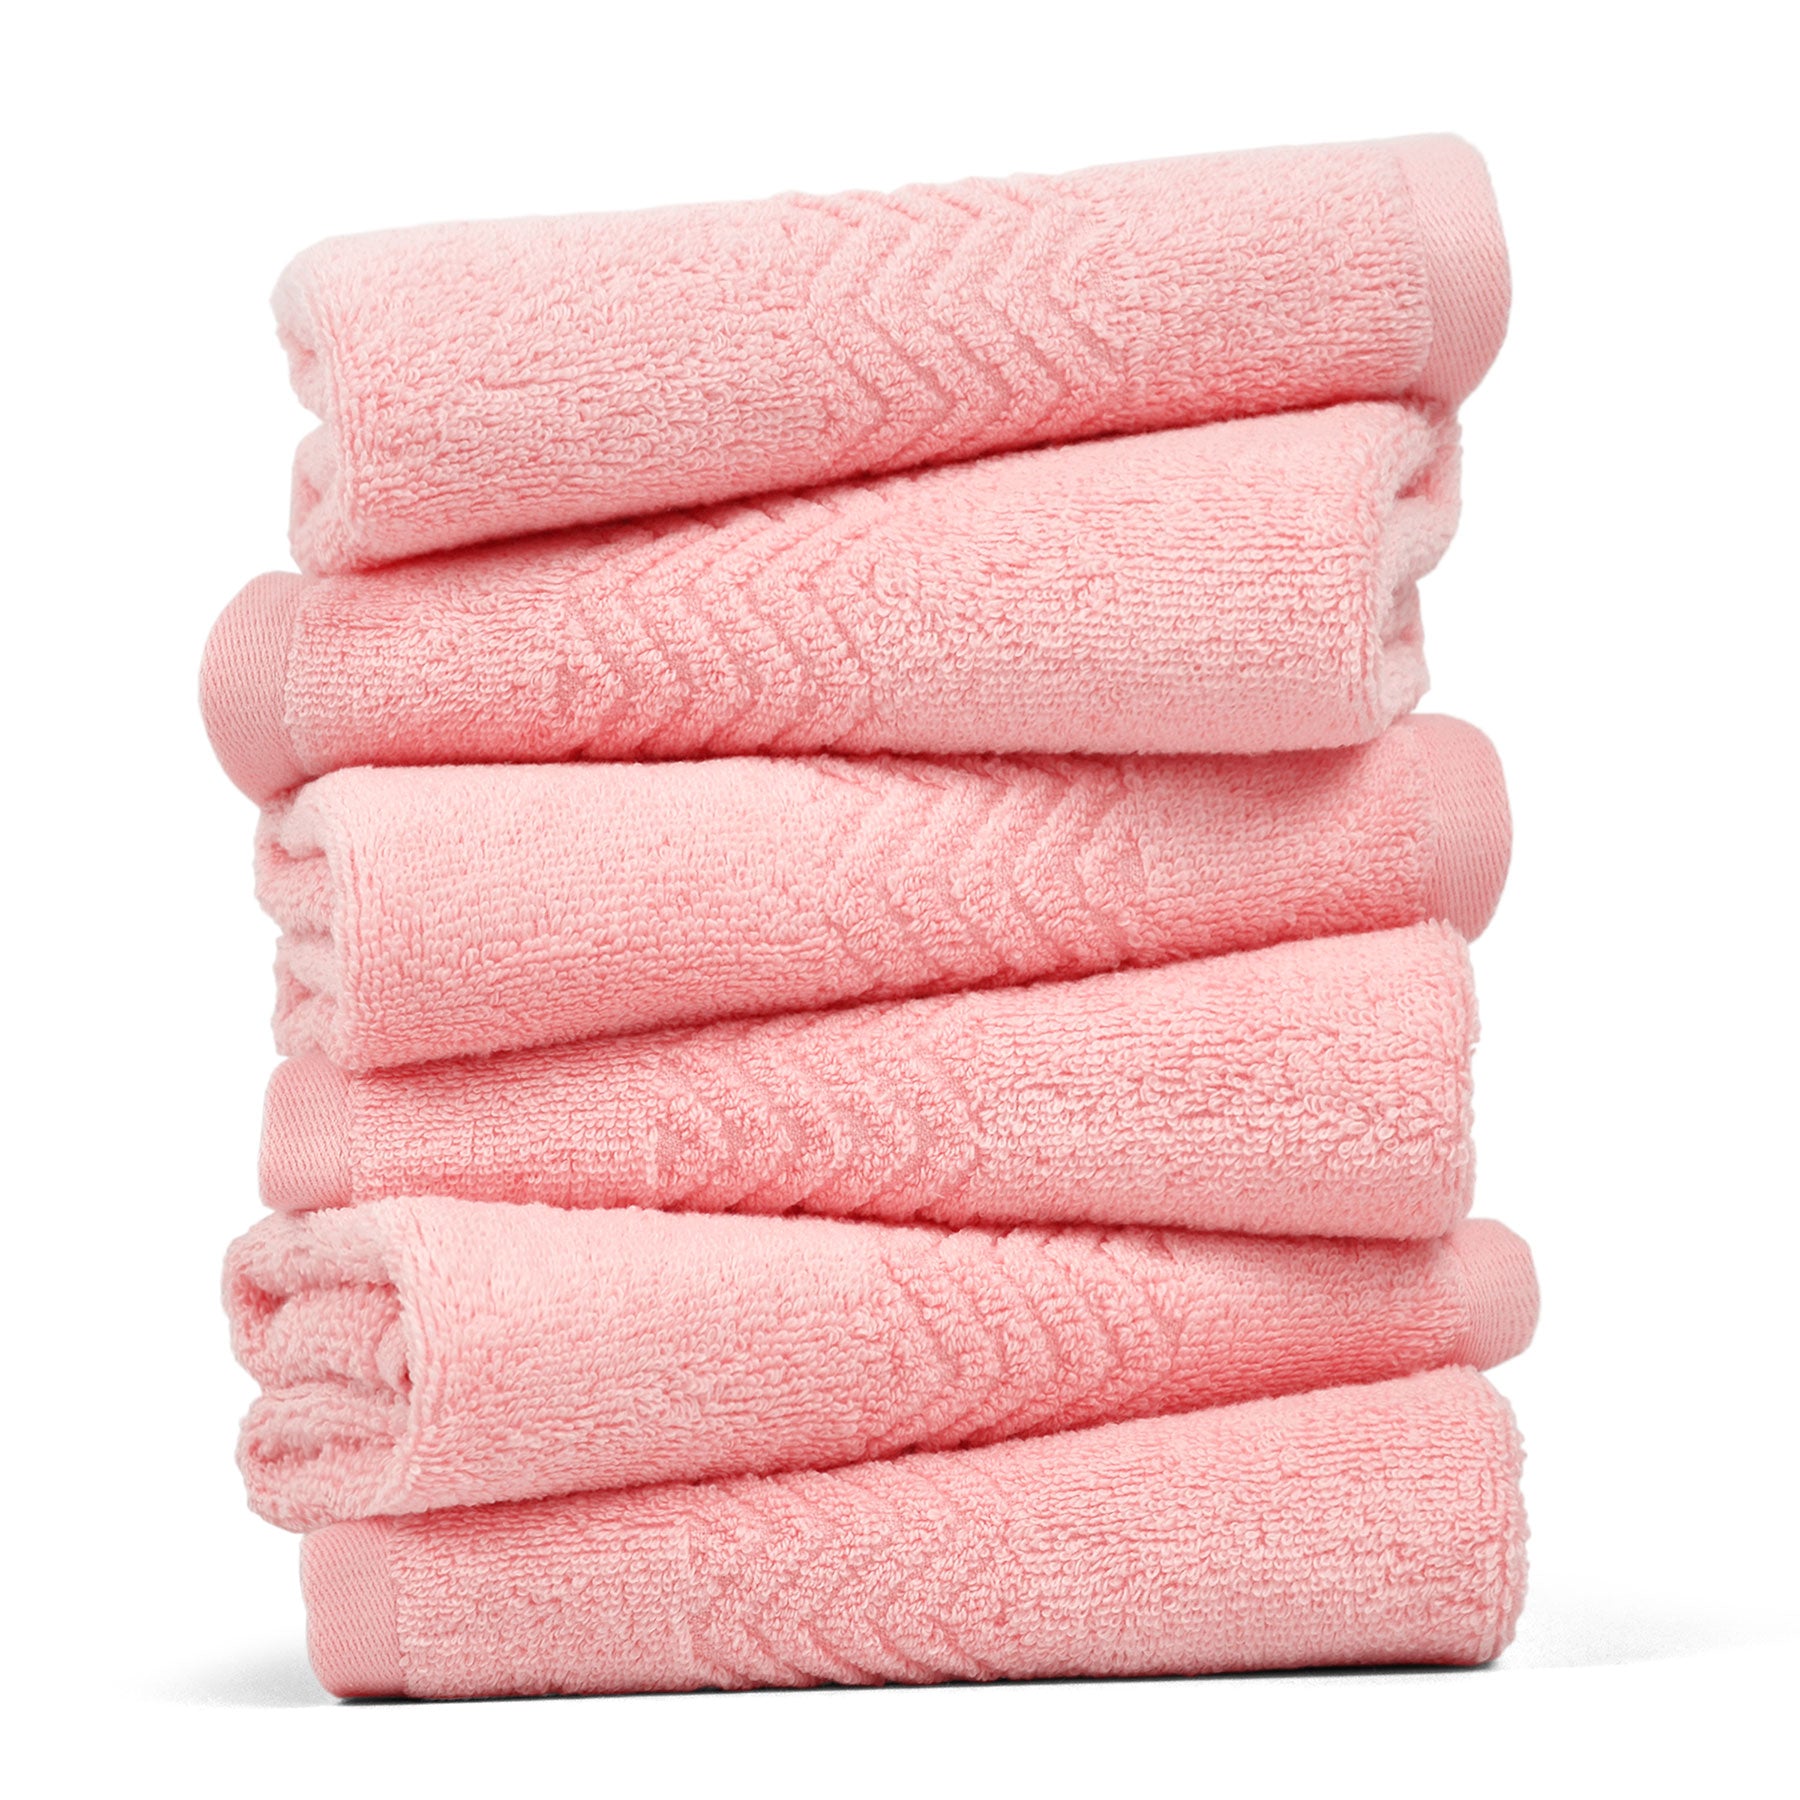 Cleanbear Pure Cotton Wash Cloths Face Cloths, 6 Colors per Set, 13 x 13  Inches (Light Blue, Jade Green, Light Green, Grey, Light Grey, Pink)